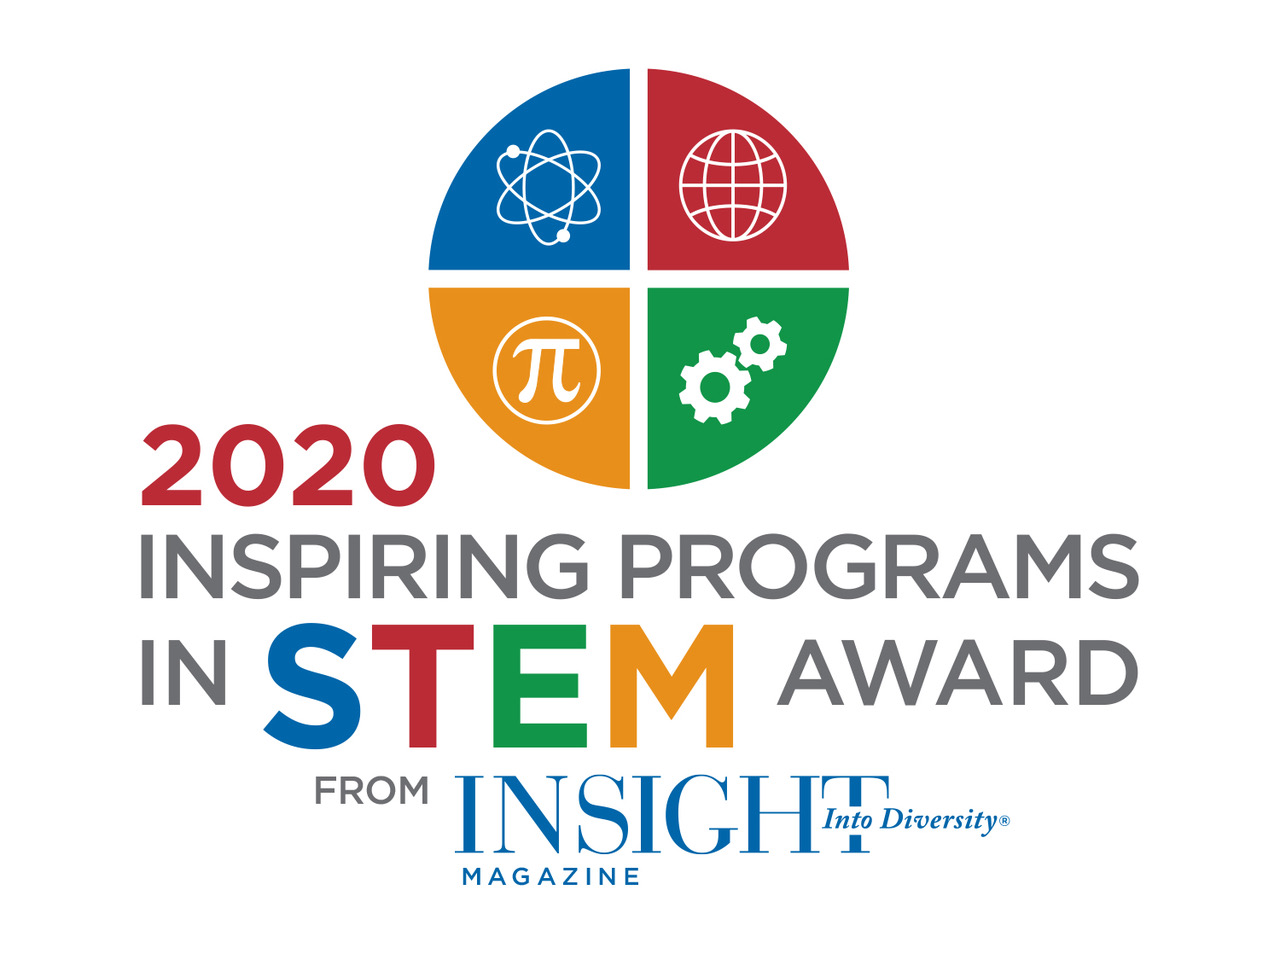 2020 Inspiring Programs in STEM Award from Insight Into Diversity Magazine